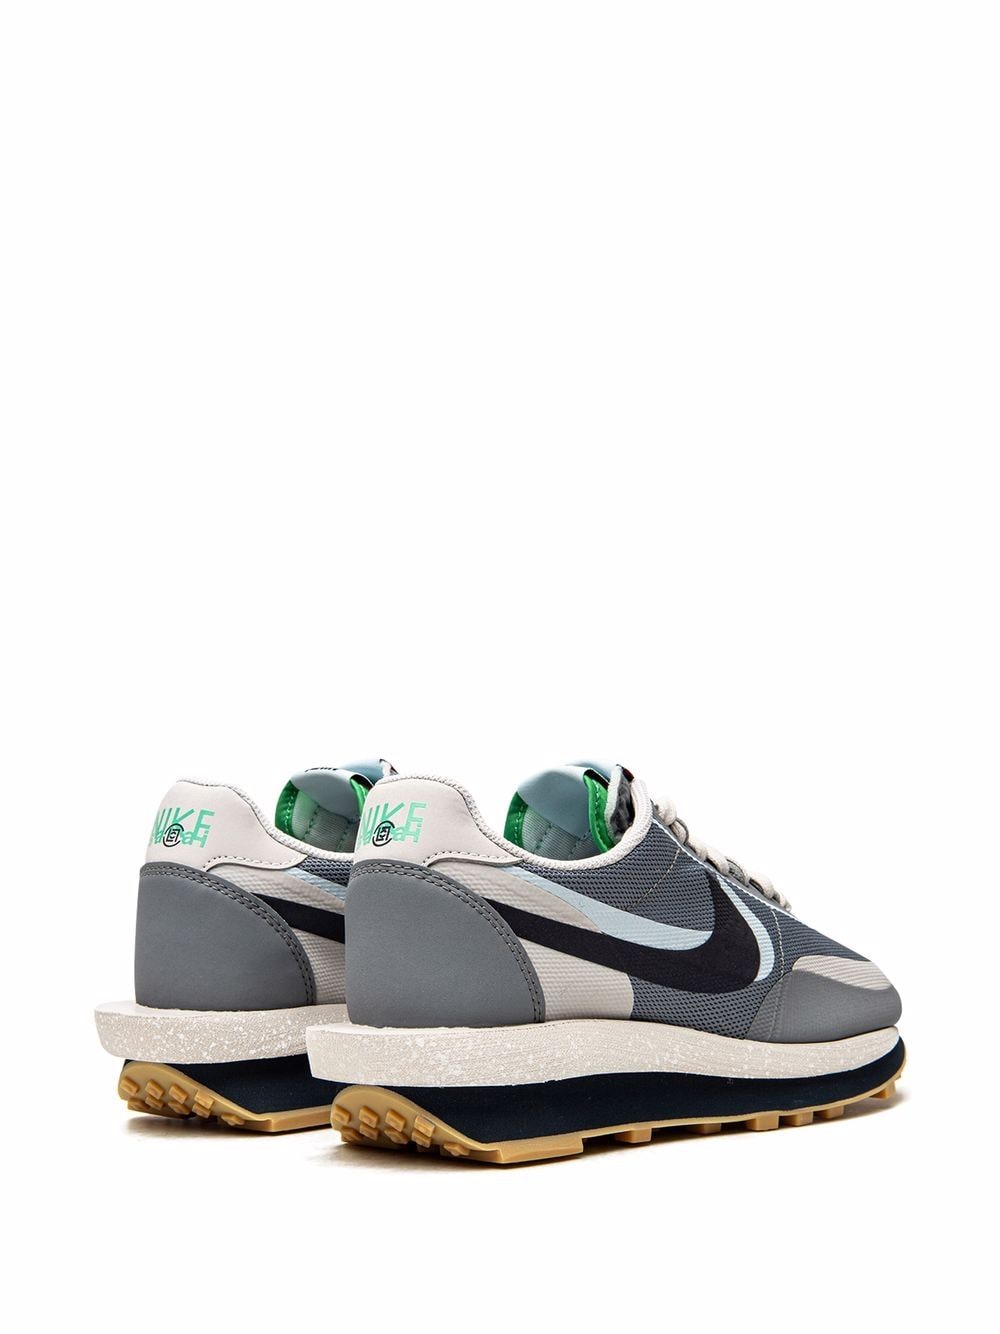 Nike x CLOT x Sacai LDWaffle "Cool Grey" Sneakers - Farfetch